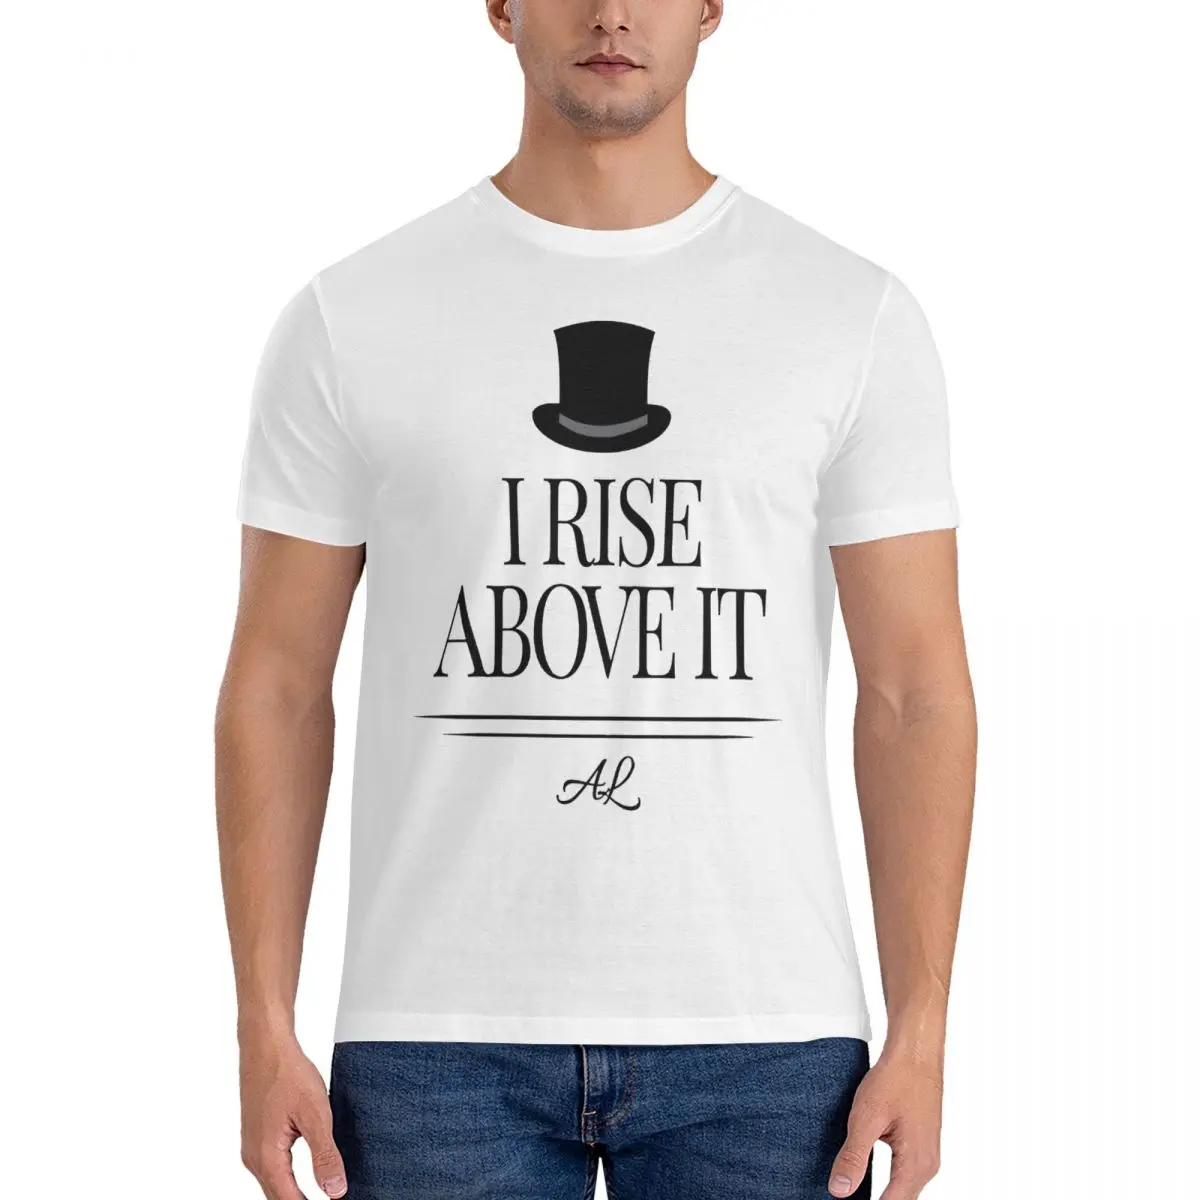 

Men T Shirt I Rise Above It Anne Lister Fashion T-Shirt Gentleman Jack topcoat pride rainbow Summer Tee Shirt 4XL 5XL Top Tees